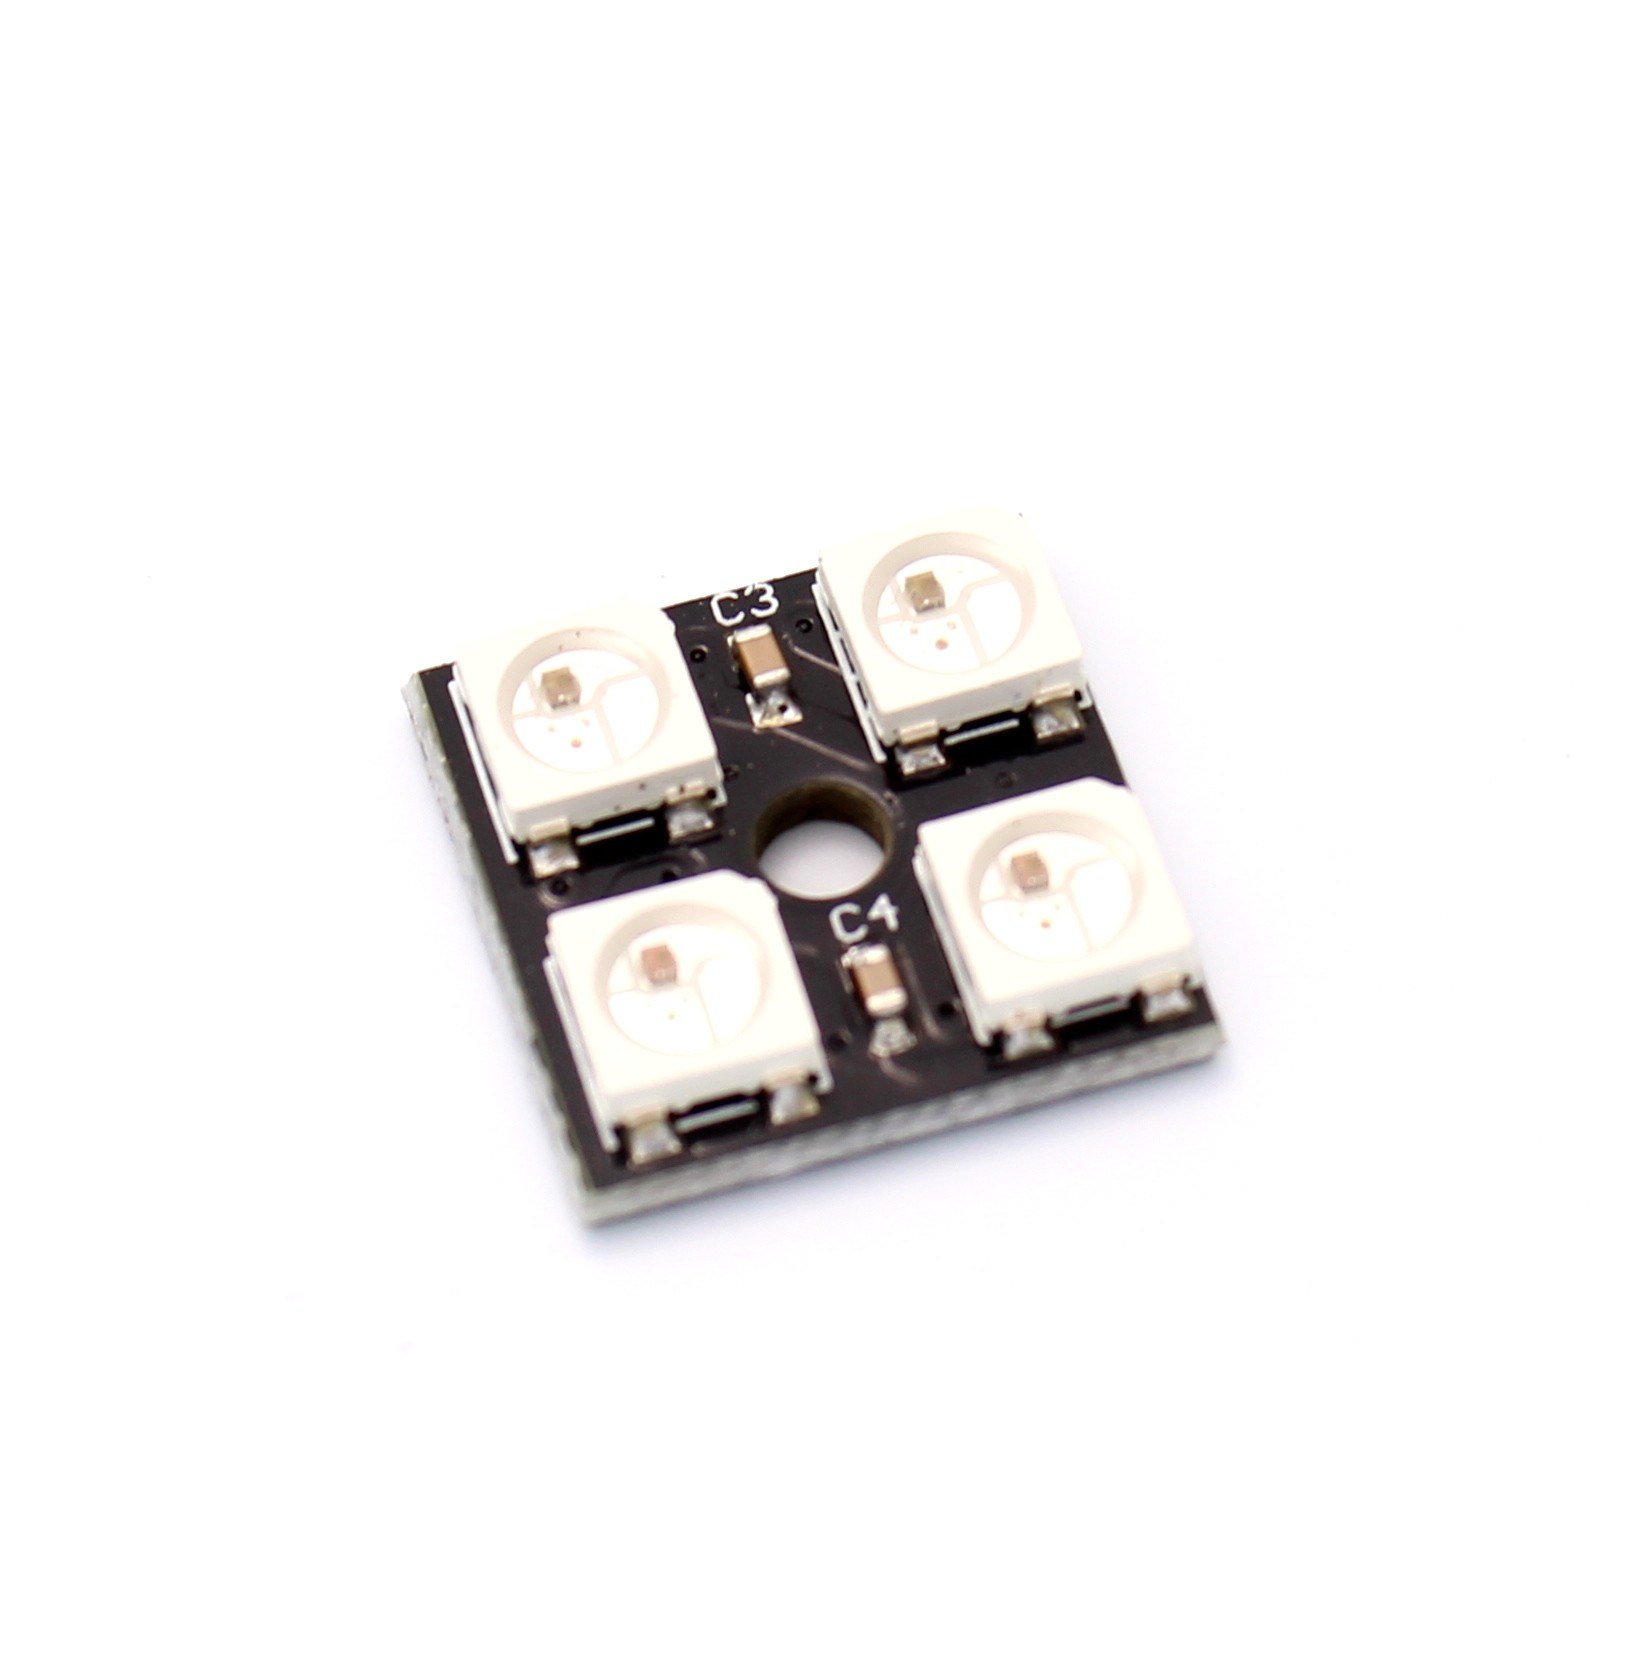 15x15mm square PCB 2x2 4 WS2812B Neopixel addressable 5050 SMD LED matrix